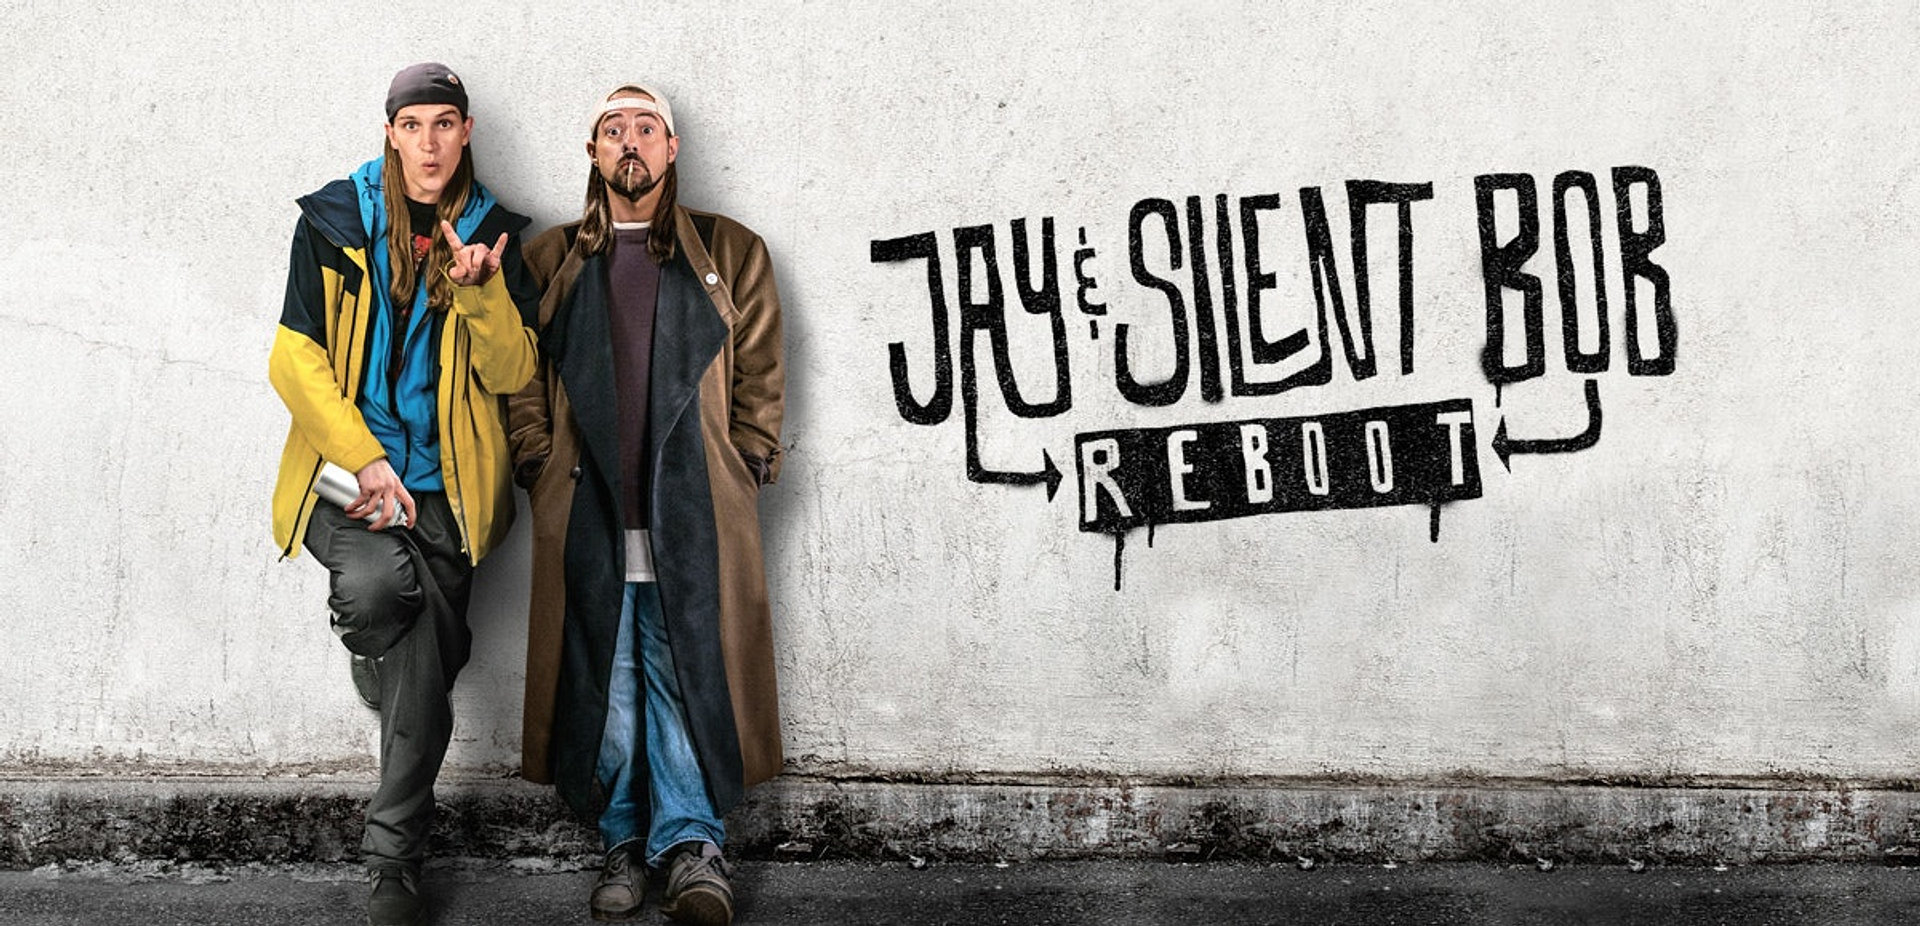 Jay & Silent Bob Reboot